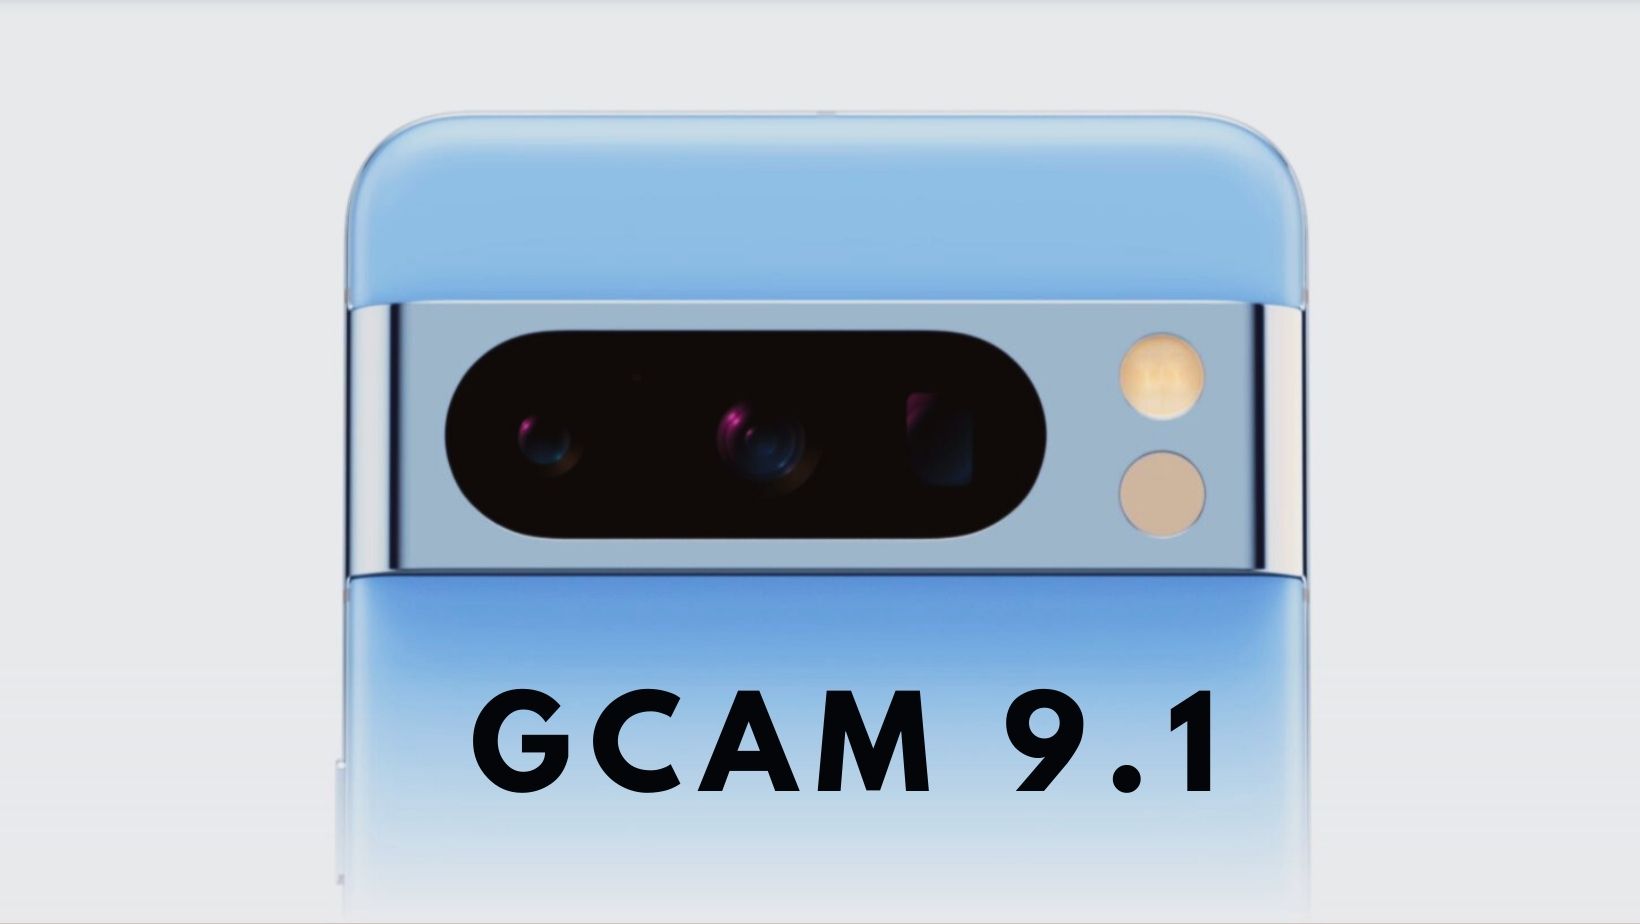 GCAM 9.1